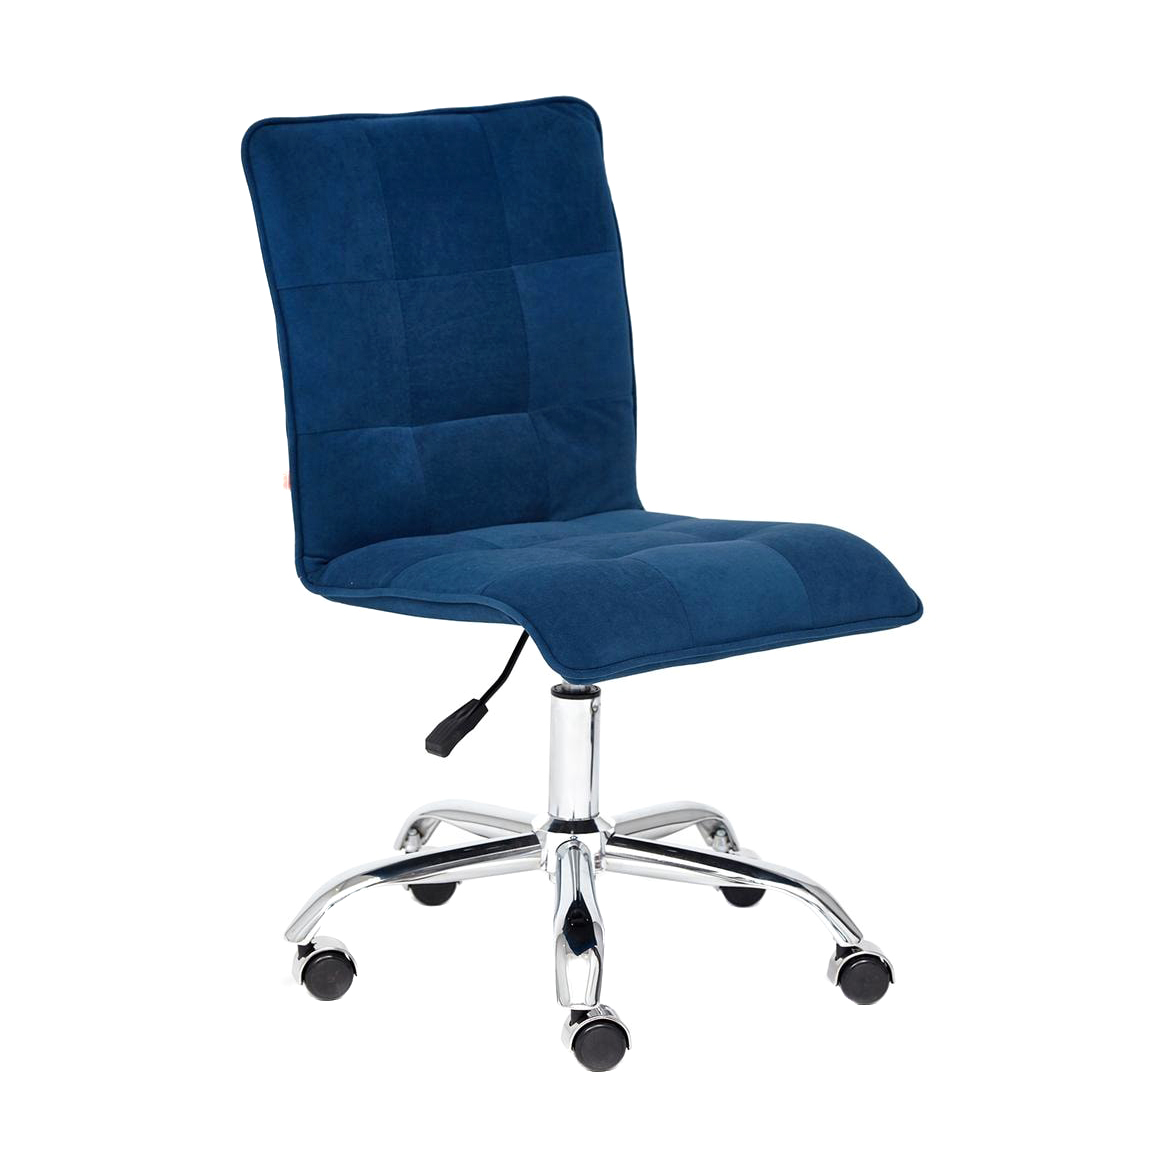 Кресло офисное TC до 100 кг 96х45х40 см синий кресло офисное tc до 100 кг 96х45х40 см